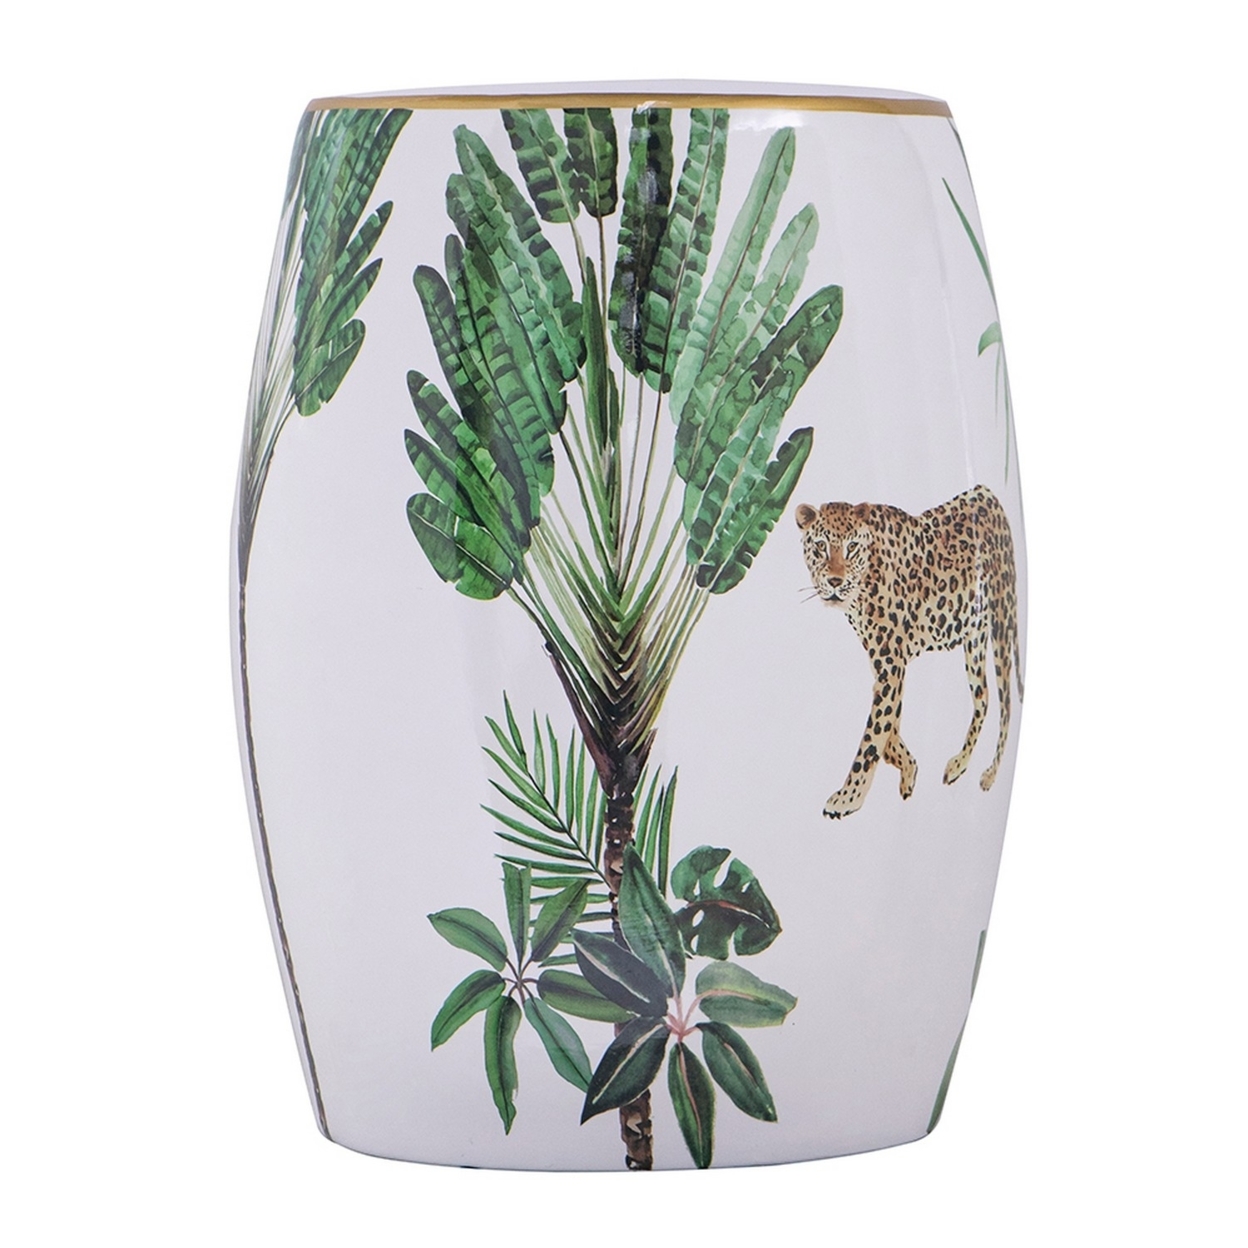 18 Inch Ceramic Accent Table, Drum Shape, Tropical Print, White, Green- Saltoro Sherpi